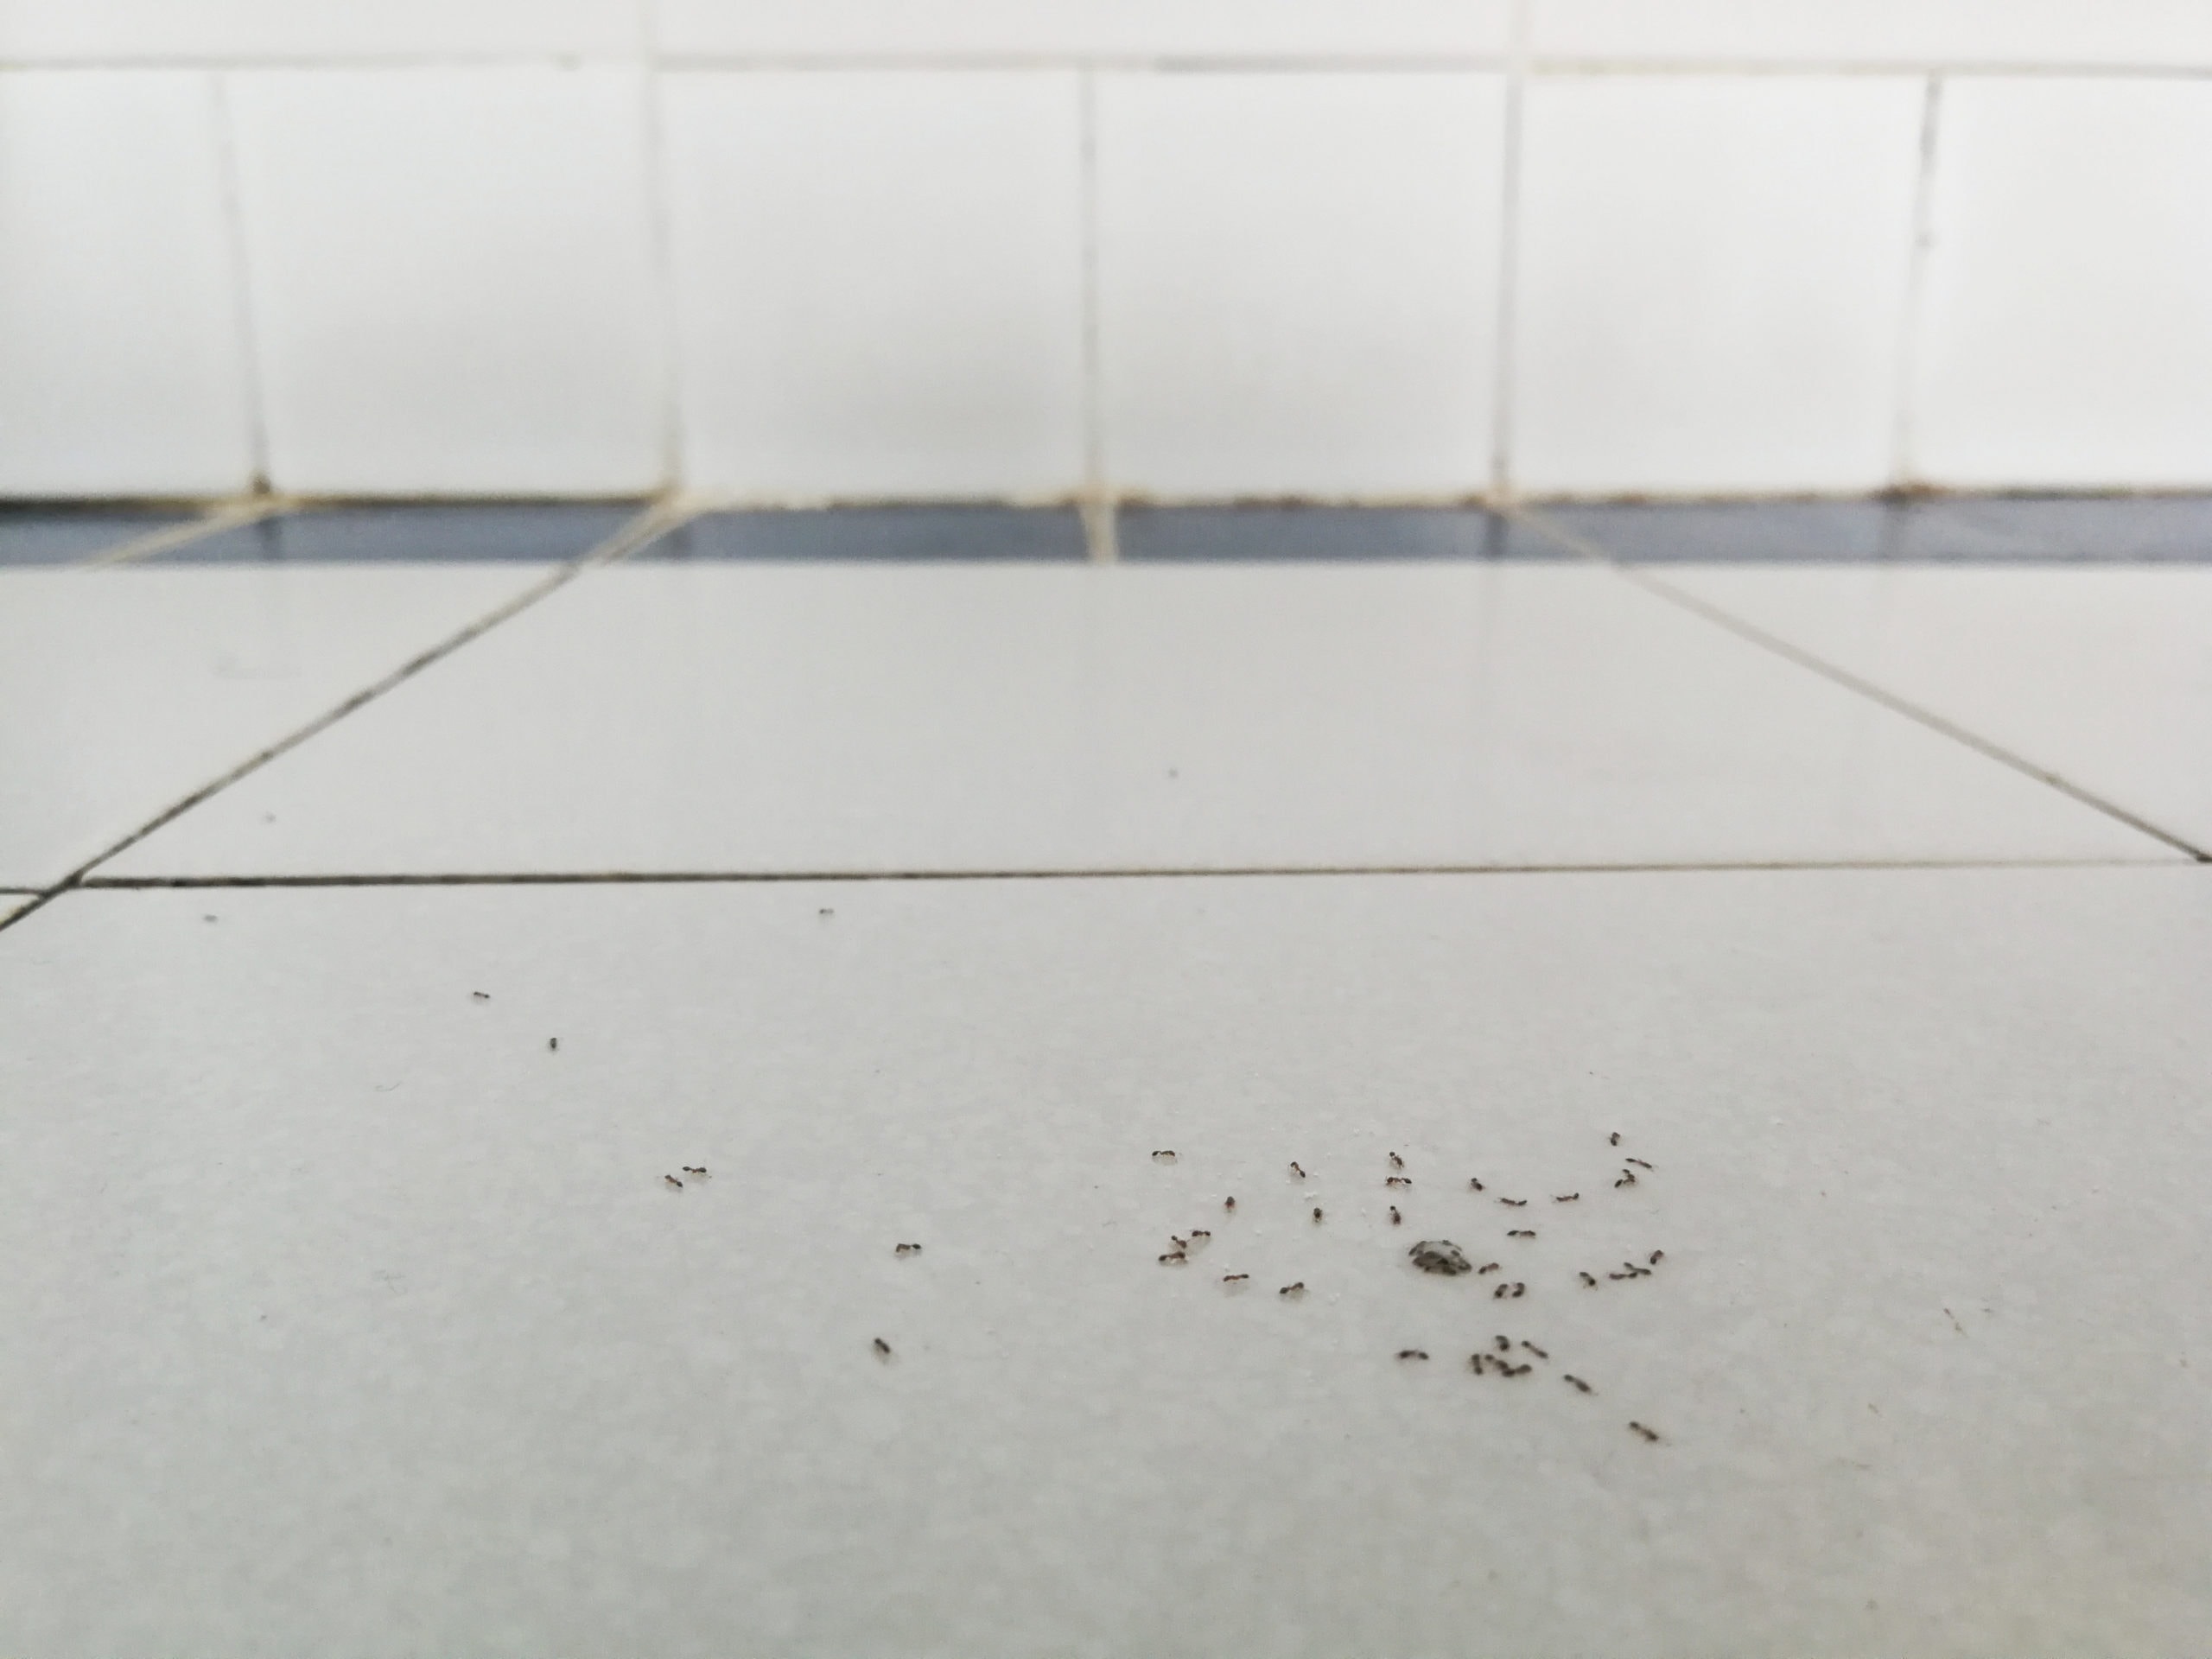 A lot of ants swarming food on the bathroom floor